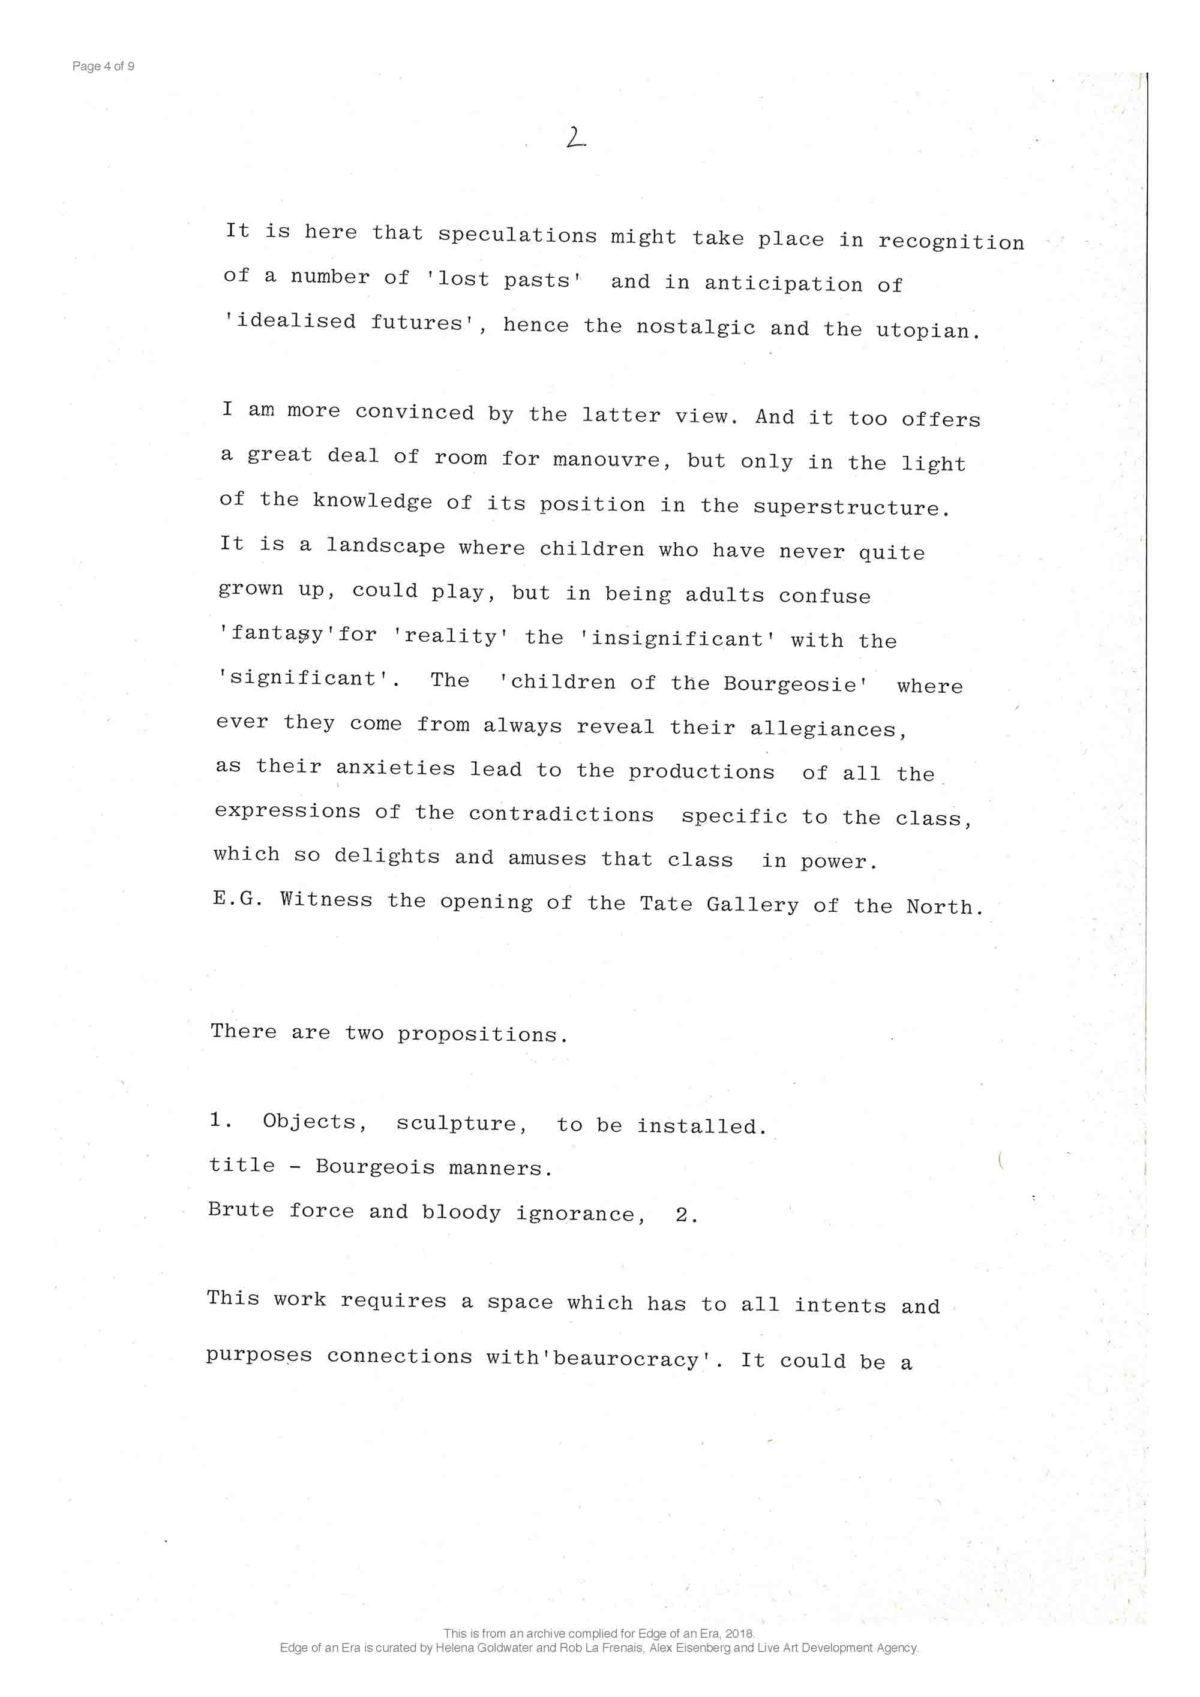 Stuart Brisley, Correspondence, 1988 (Page 4 of 9)